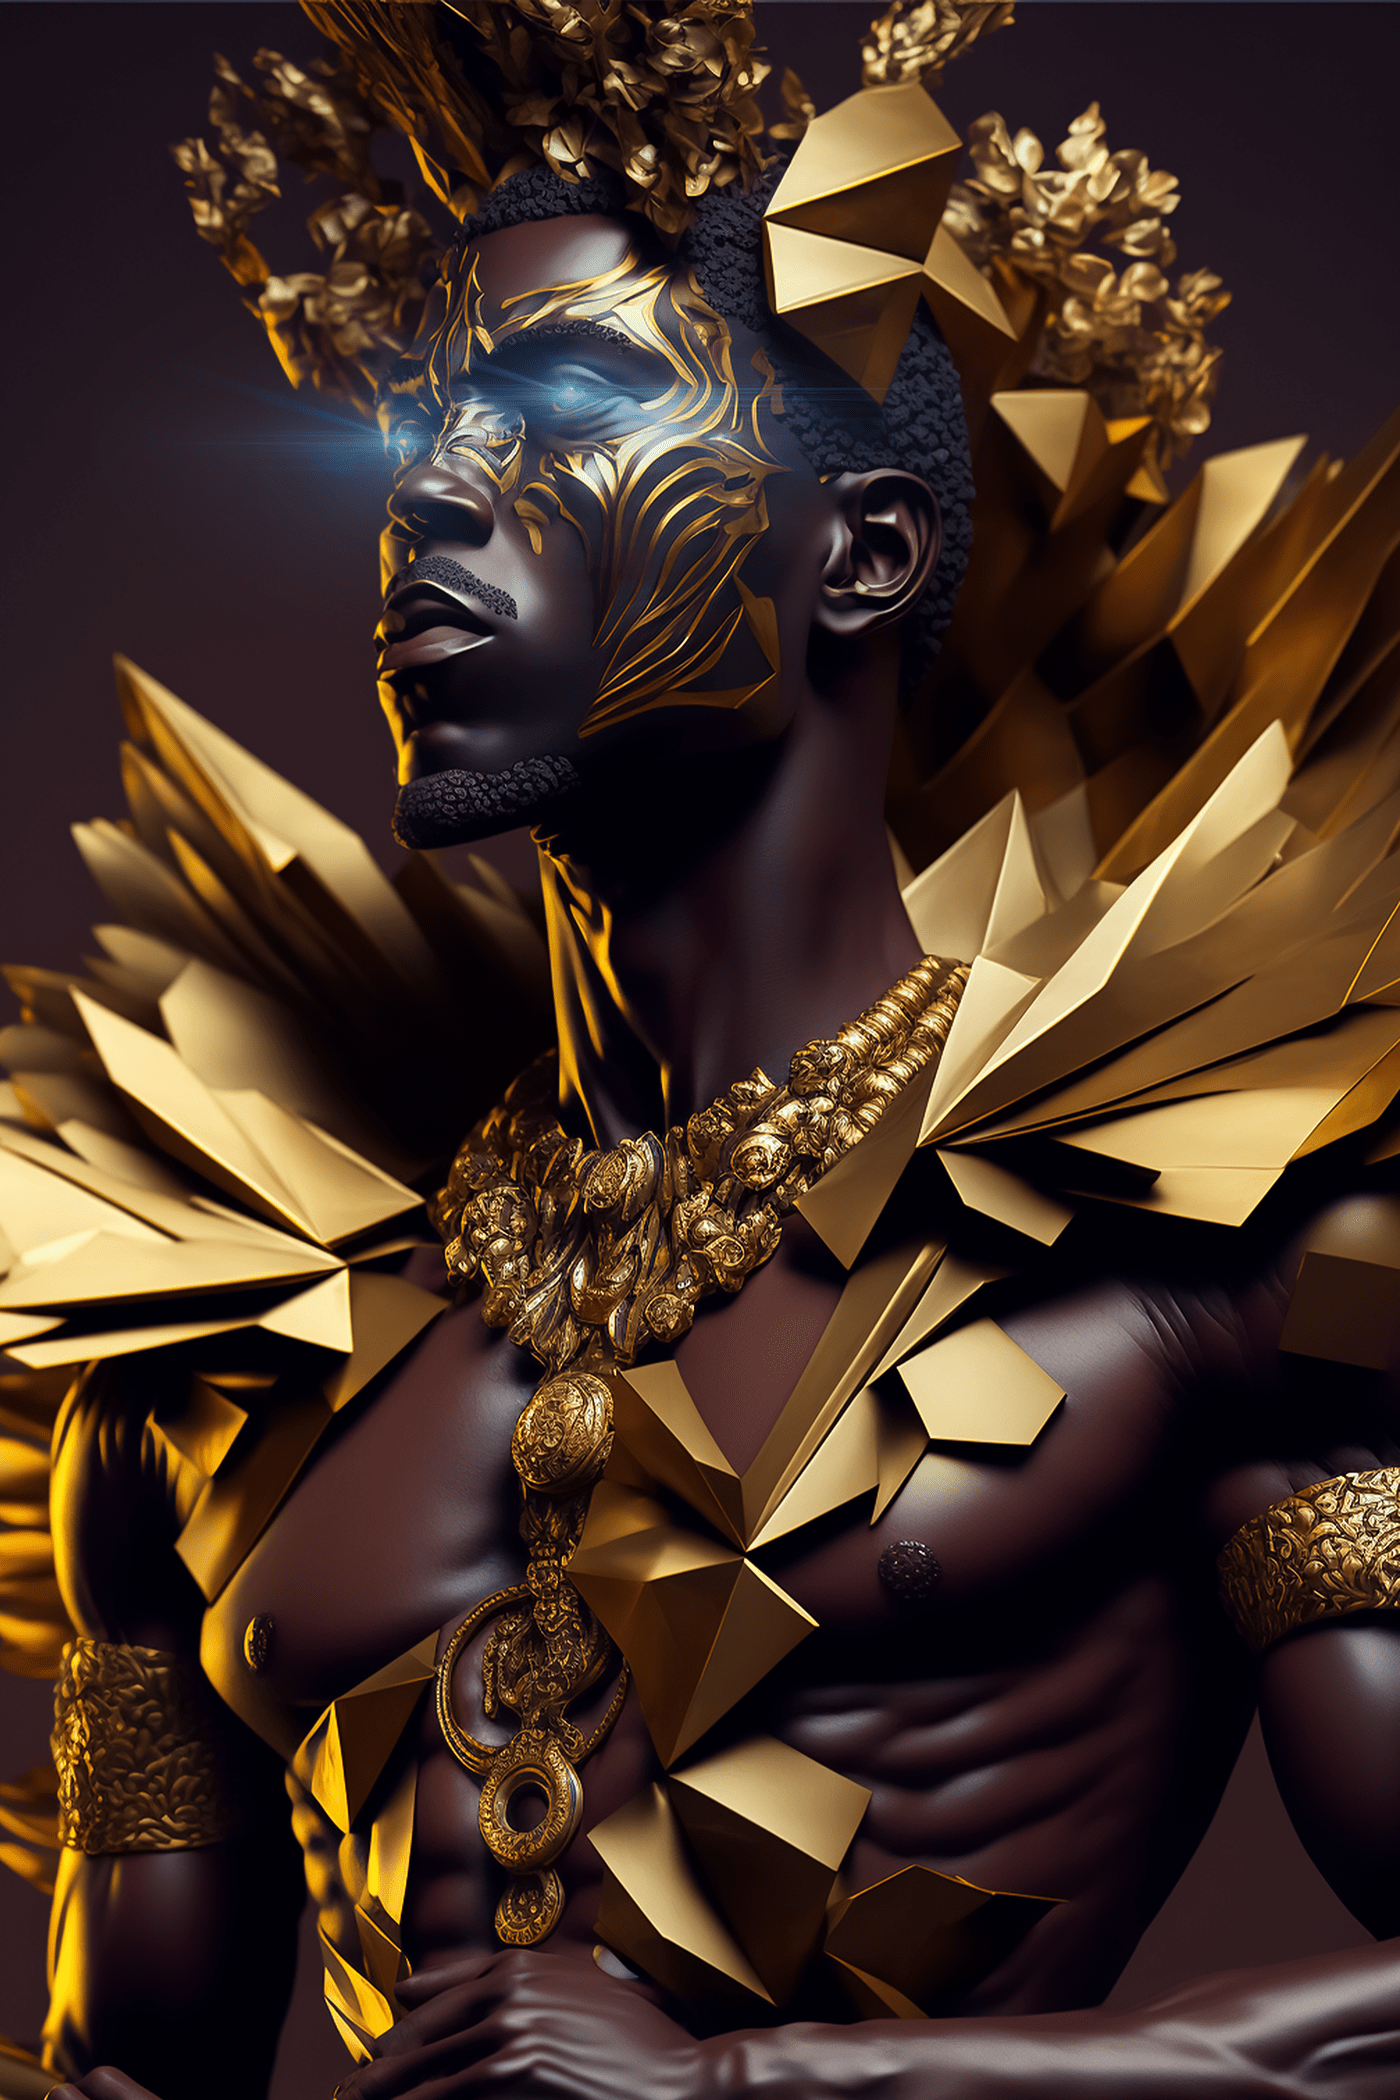 africa aiart black digitalart male man model photomanipulation portrait